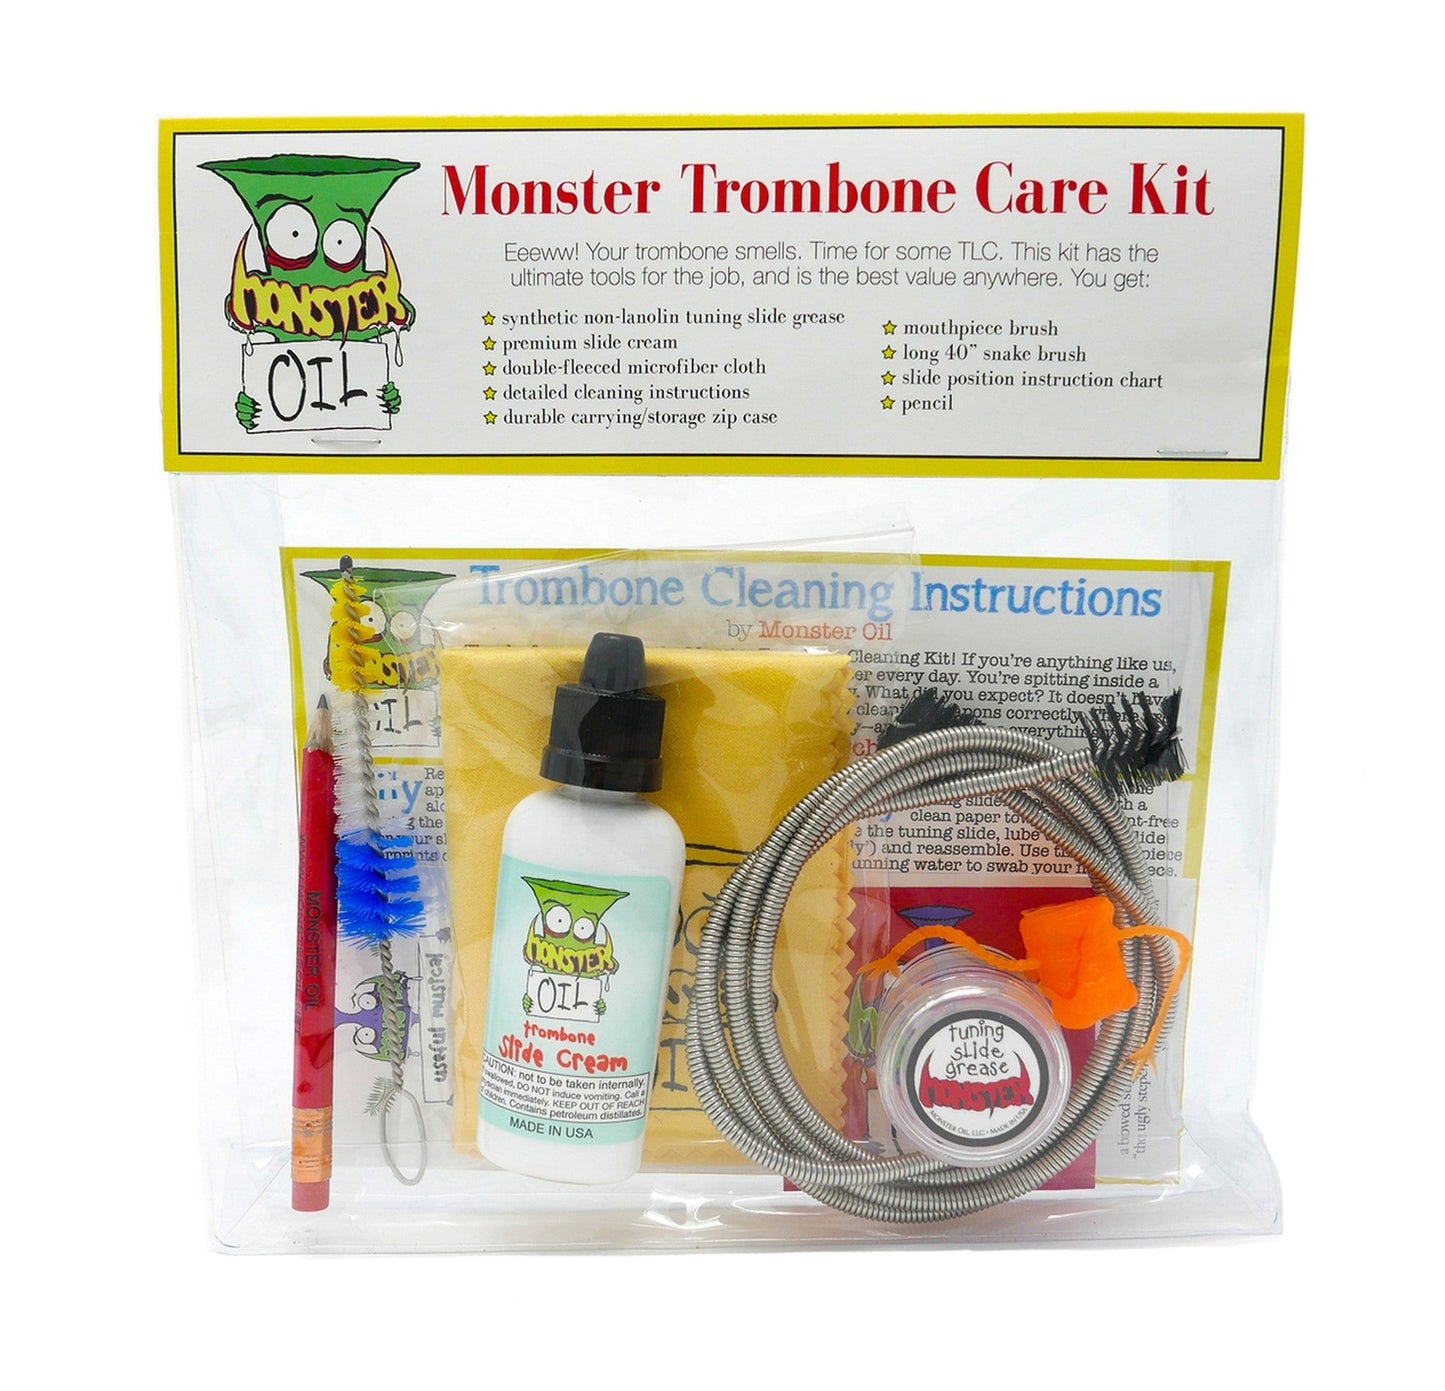 Monster Oil Care and Cleaning Kit for Trombone - Premium Trombone Maintenance Kit from Monster Oil - Just $24.69! Shop now at Poppa's Music